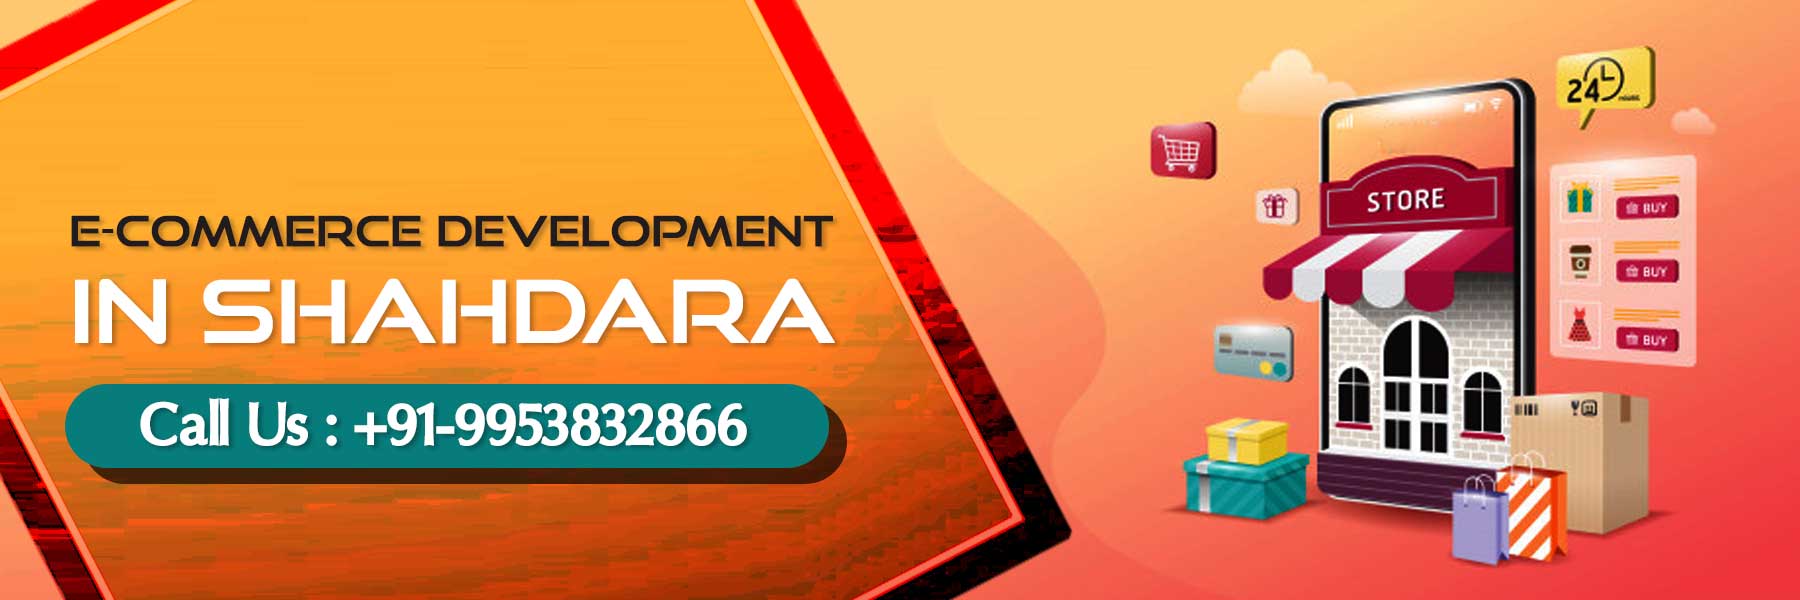 ecommerce development in Shahdara